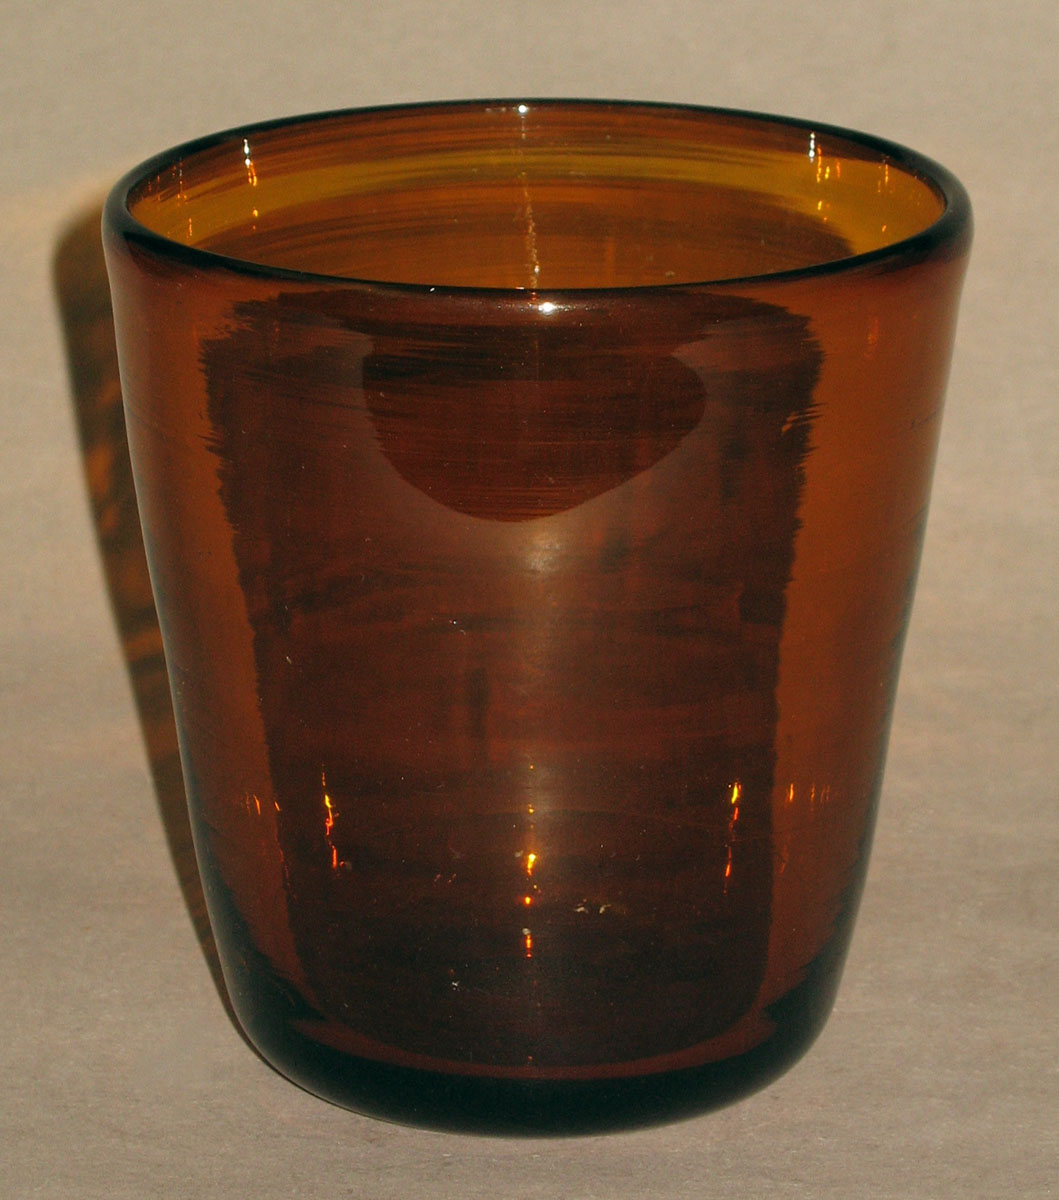 1965.2320.002 Amber glass tumbler